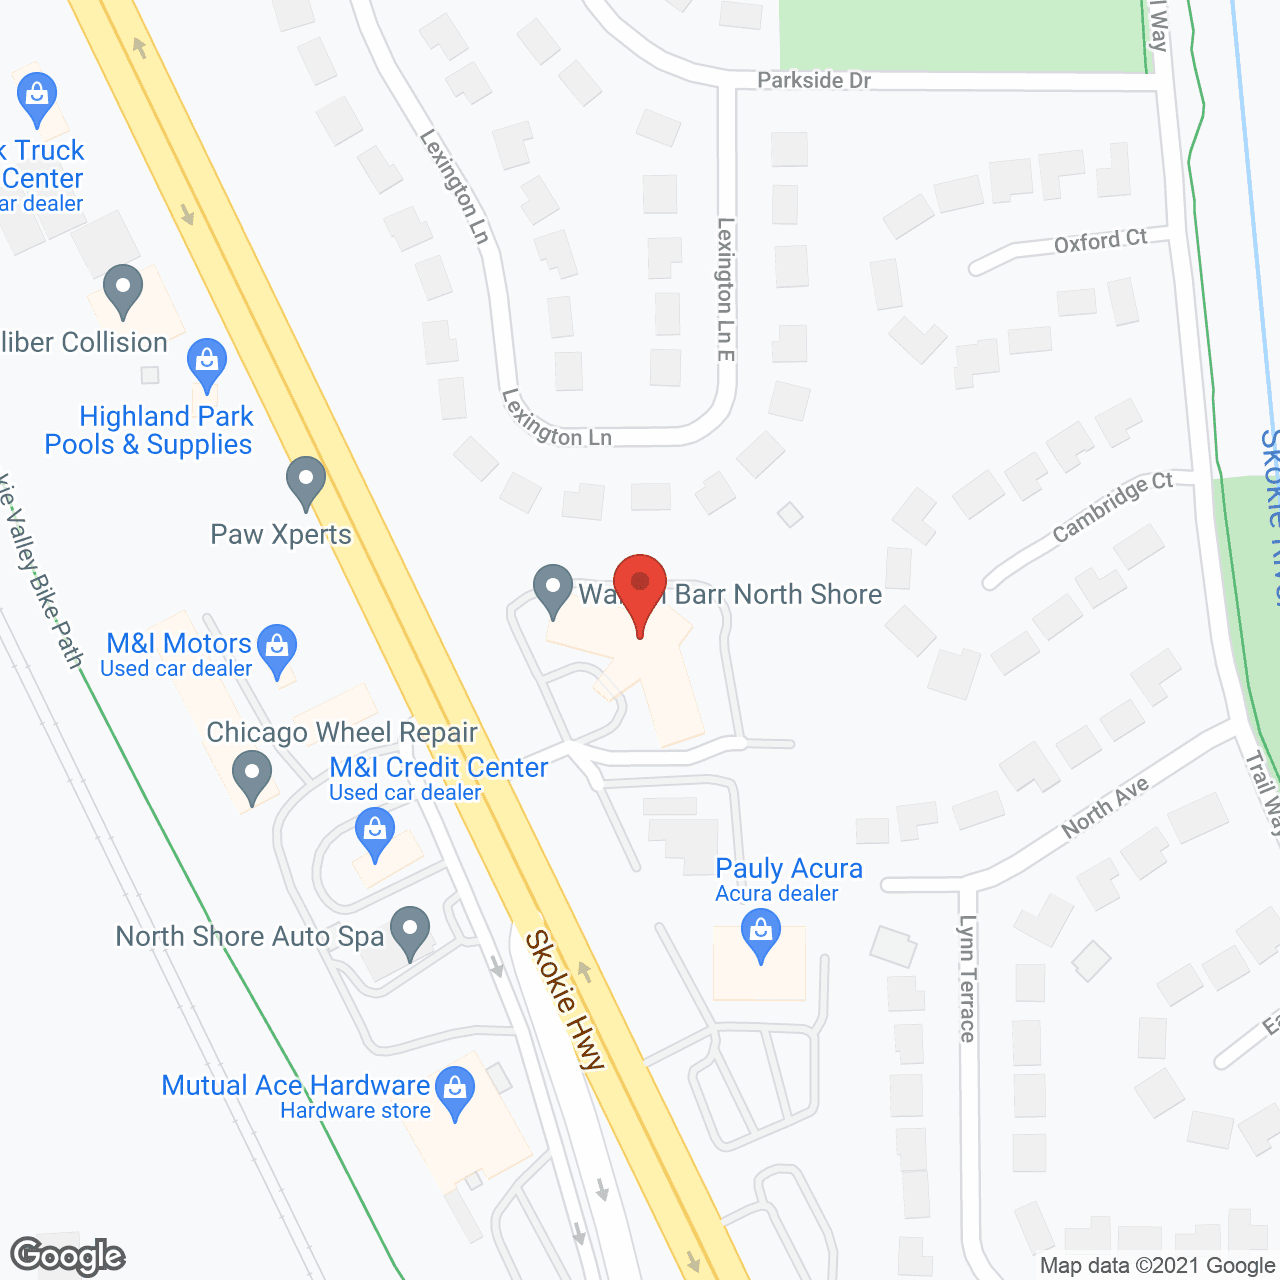 Warren Barr North Shore/ Red Oaks of Highland Park in google map